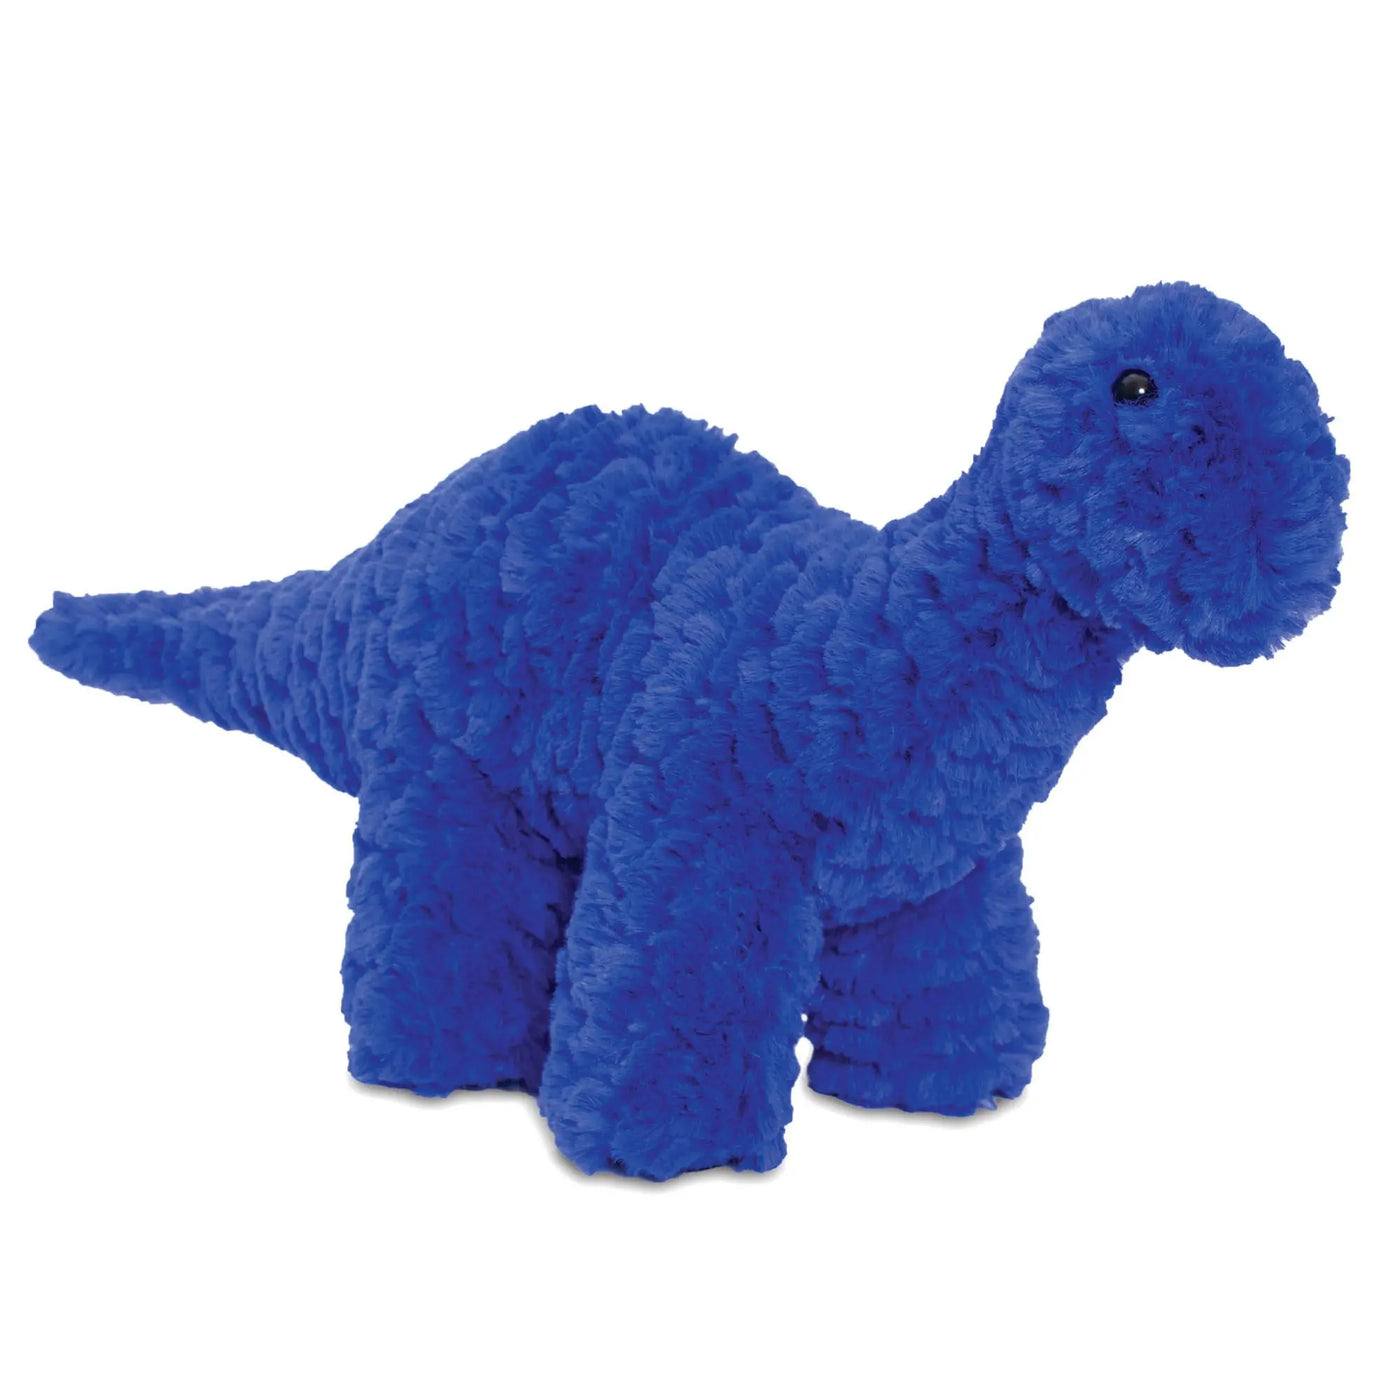 manhattan toy company dinosaur